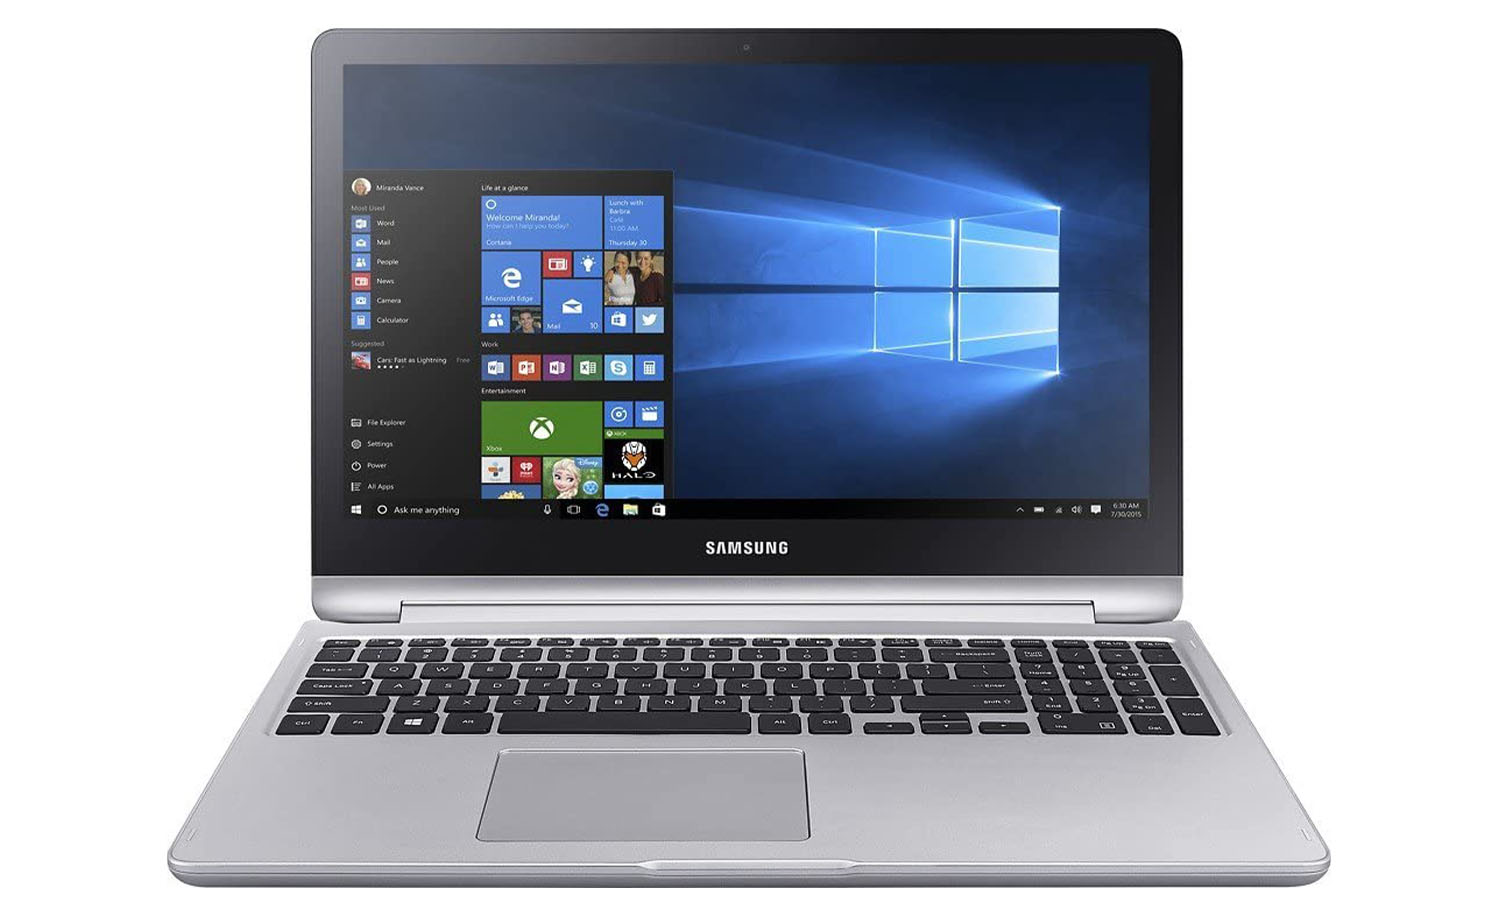 Samsung Notebook 7 Spin Intel Core i7 7th Gen 12GB RAM 256GB SSD Windows 10